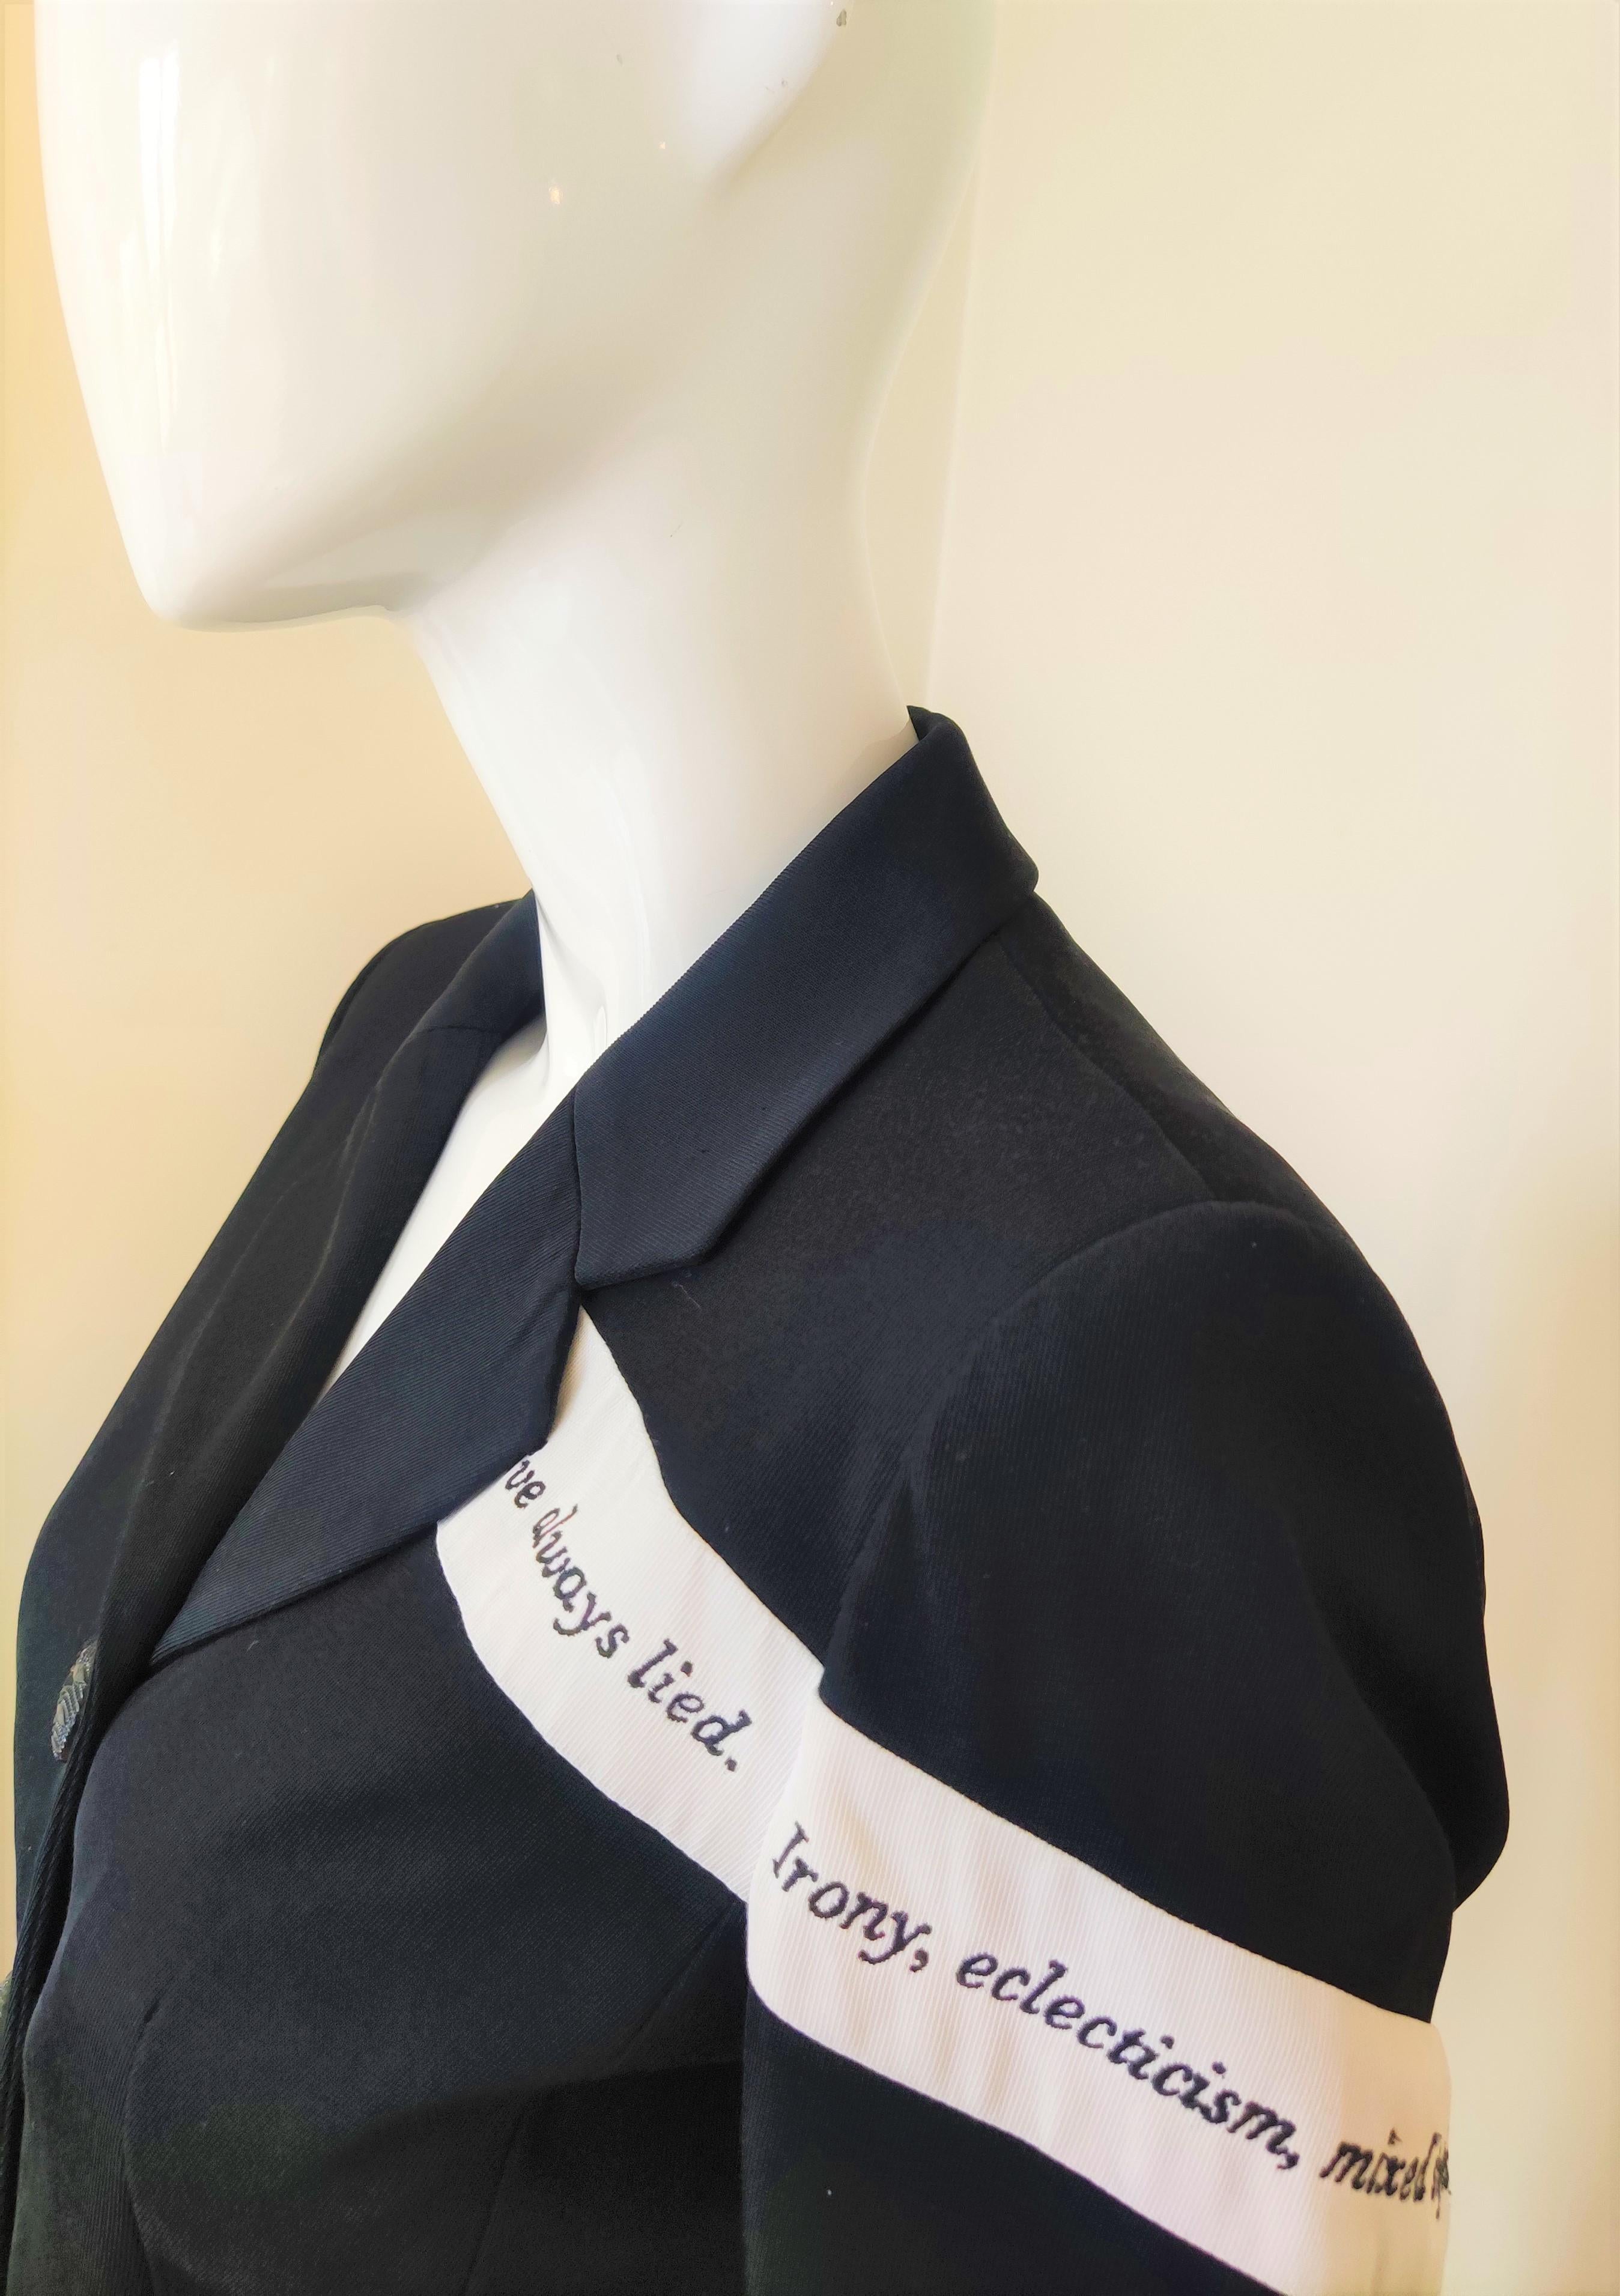 Moschino Cheap and Chic Irony Text Tape Vintage Couture Schwarz-Weißes Kleid Anzug im Angebot 9